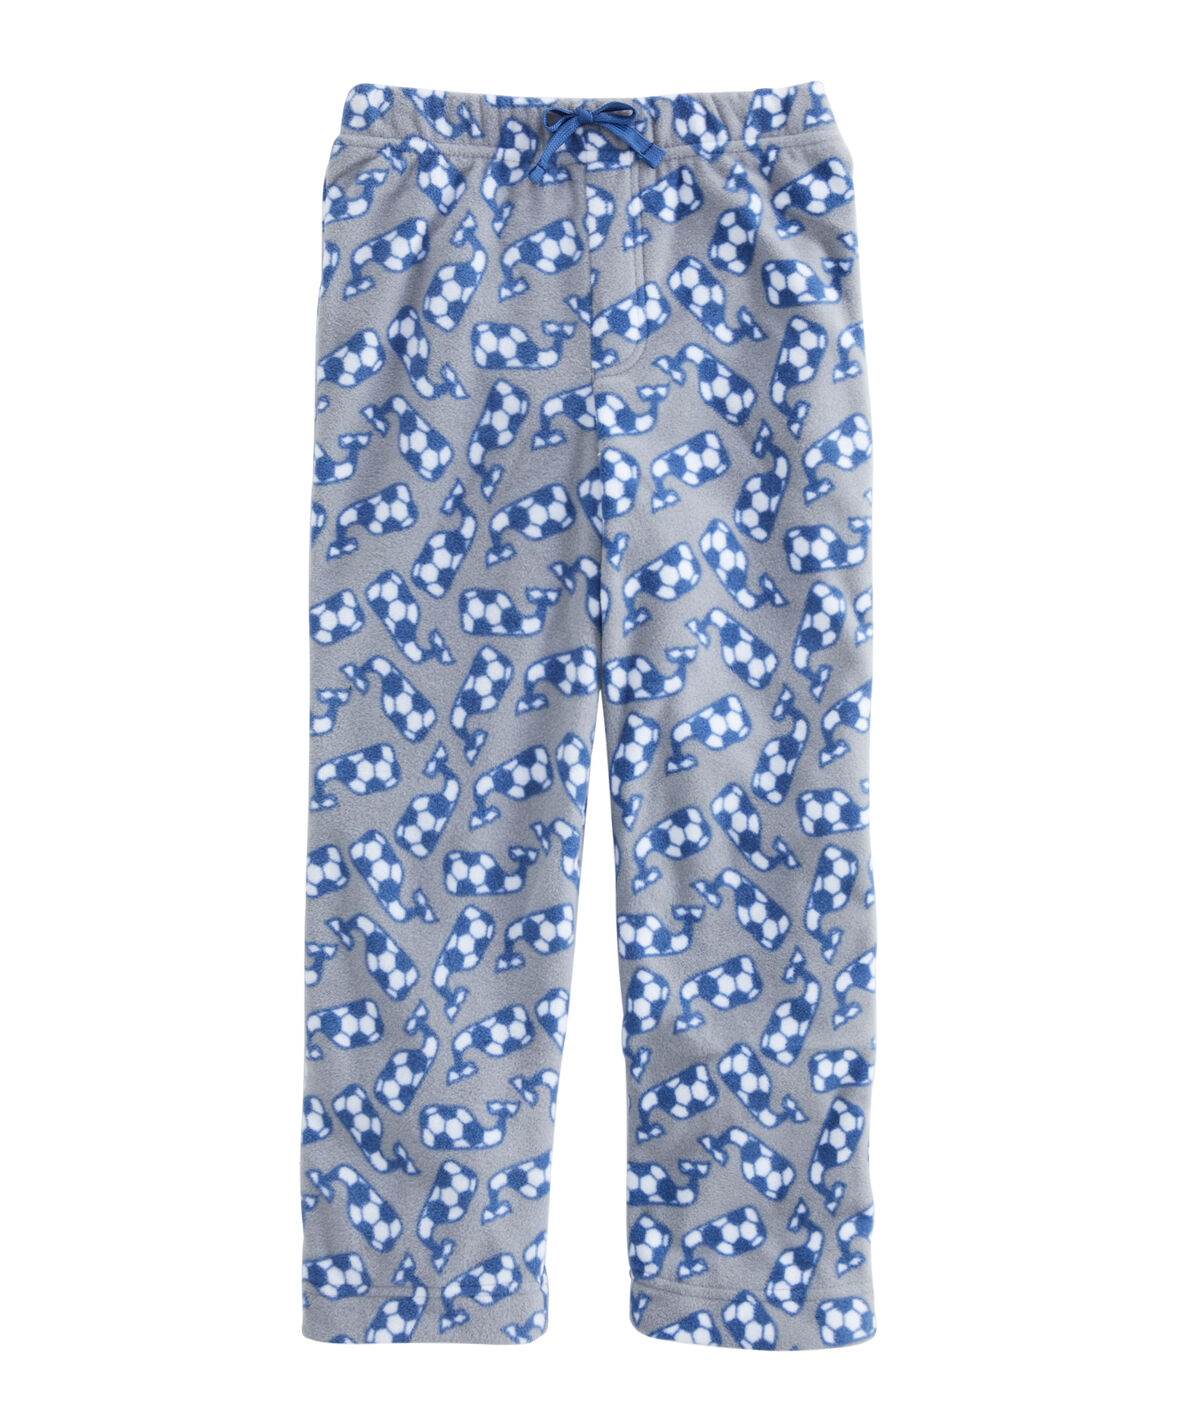 Shop Boys Whale Fleece Pajama Pants at vineyard vines